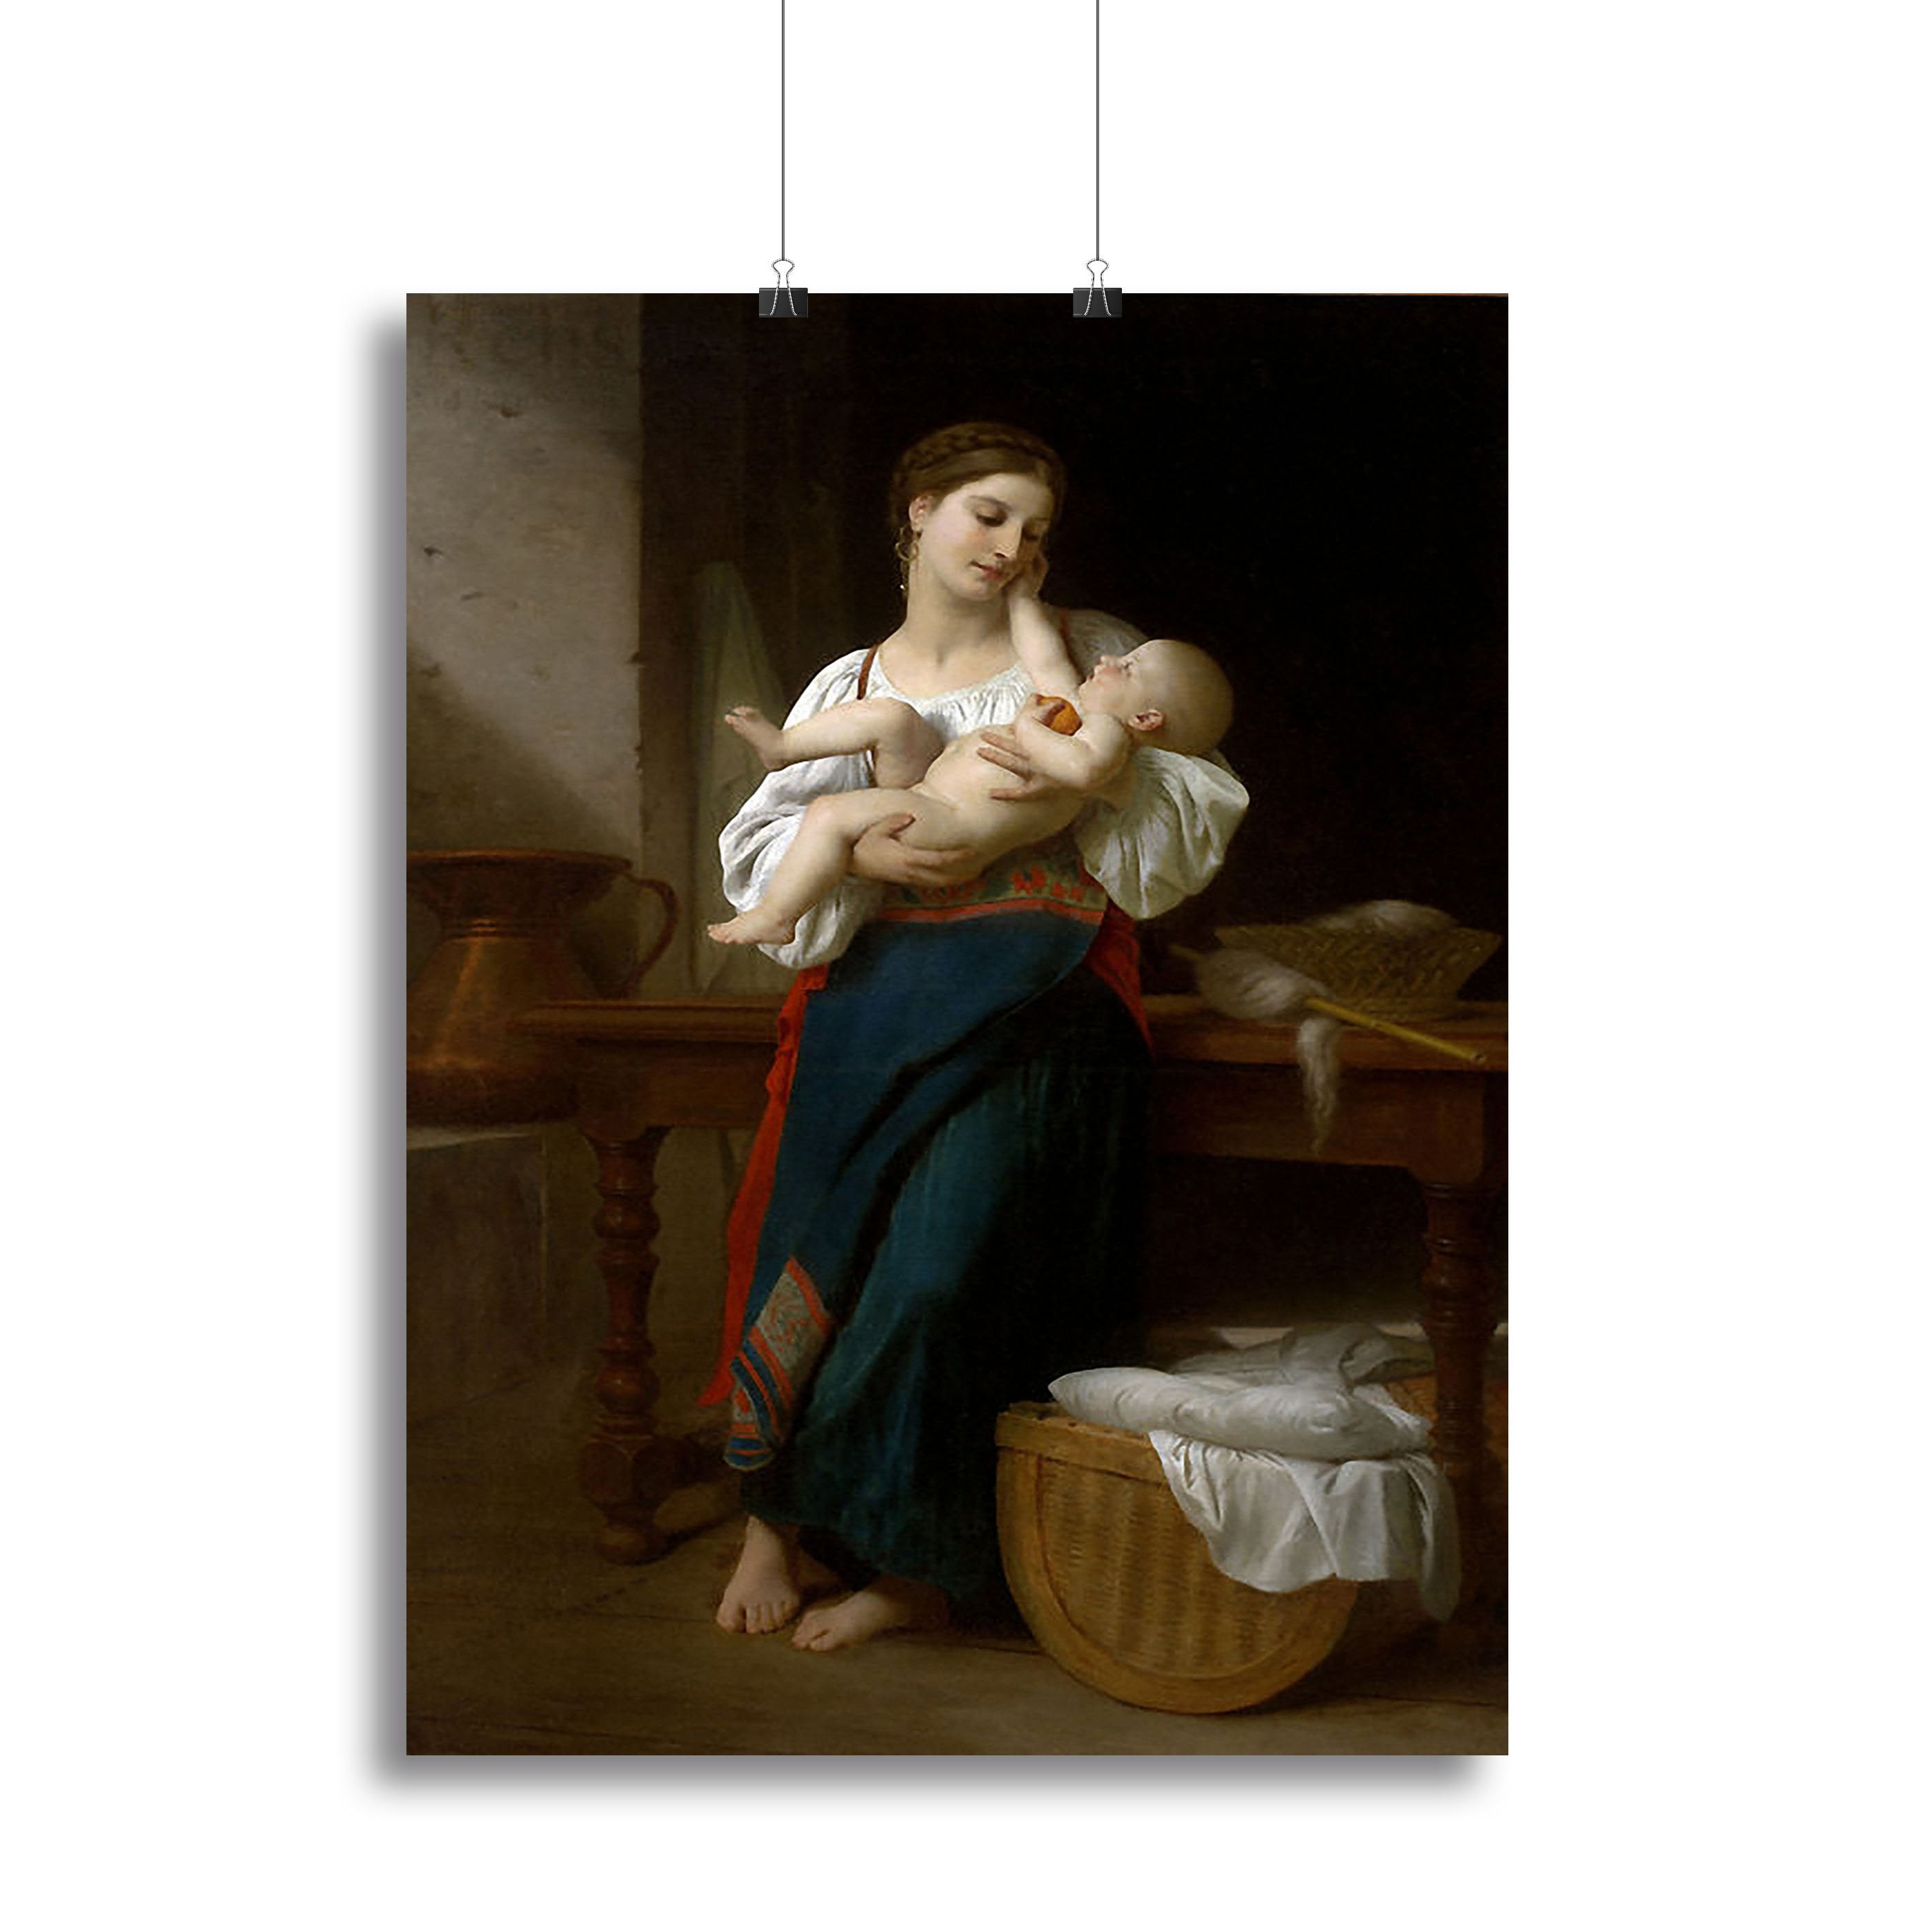 Premires Caresses By Bouguereau Canvas Print or Poster